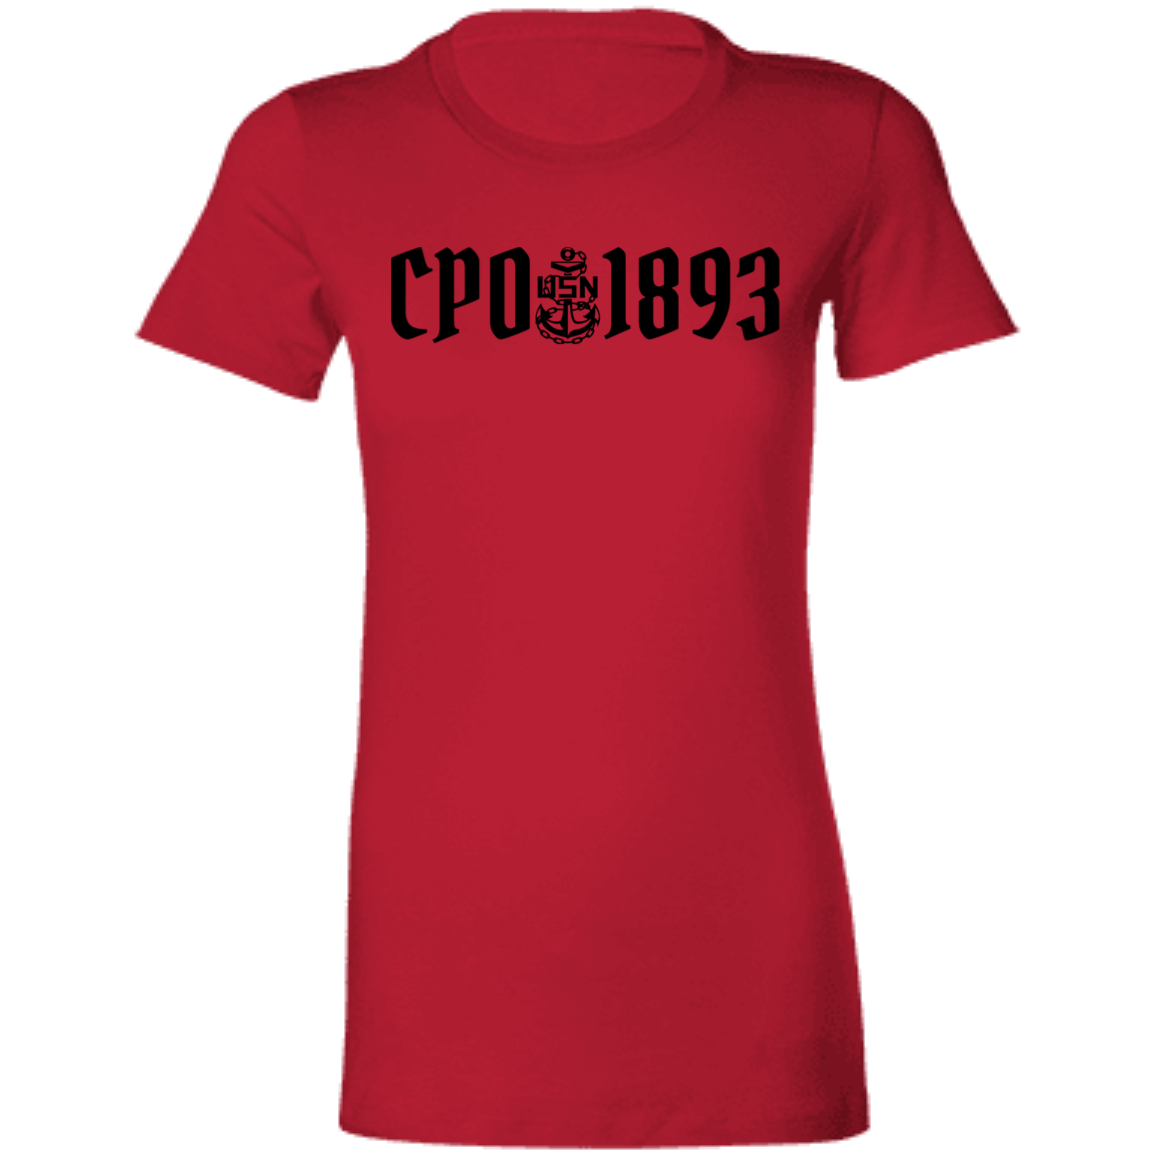 CPO 1893 Ladies' Favorite T-Shirt